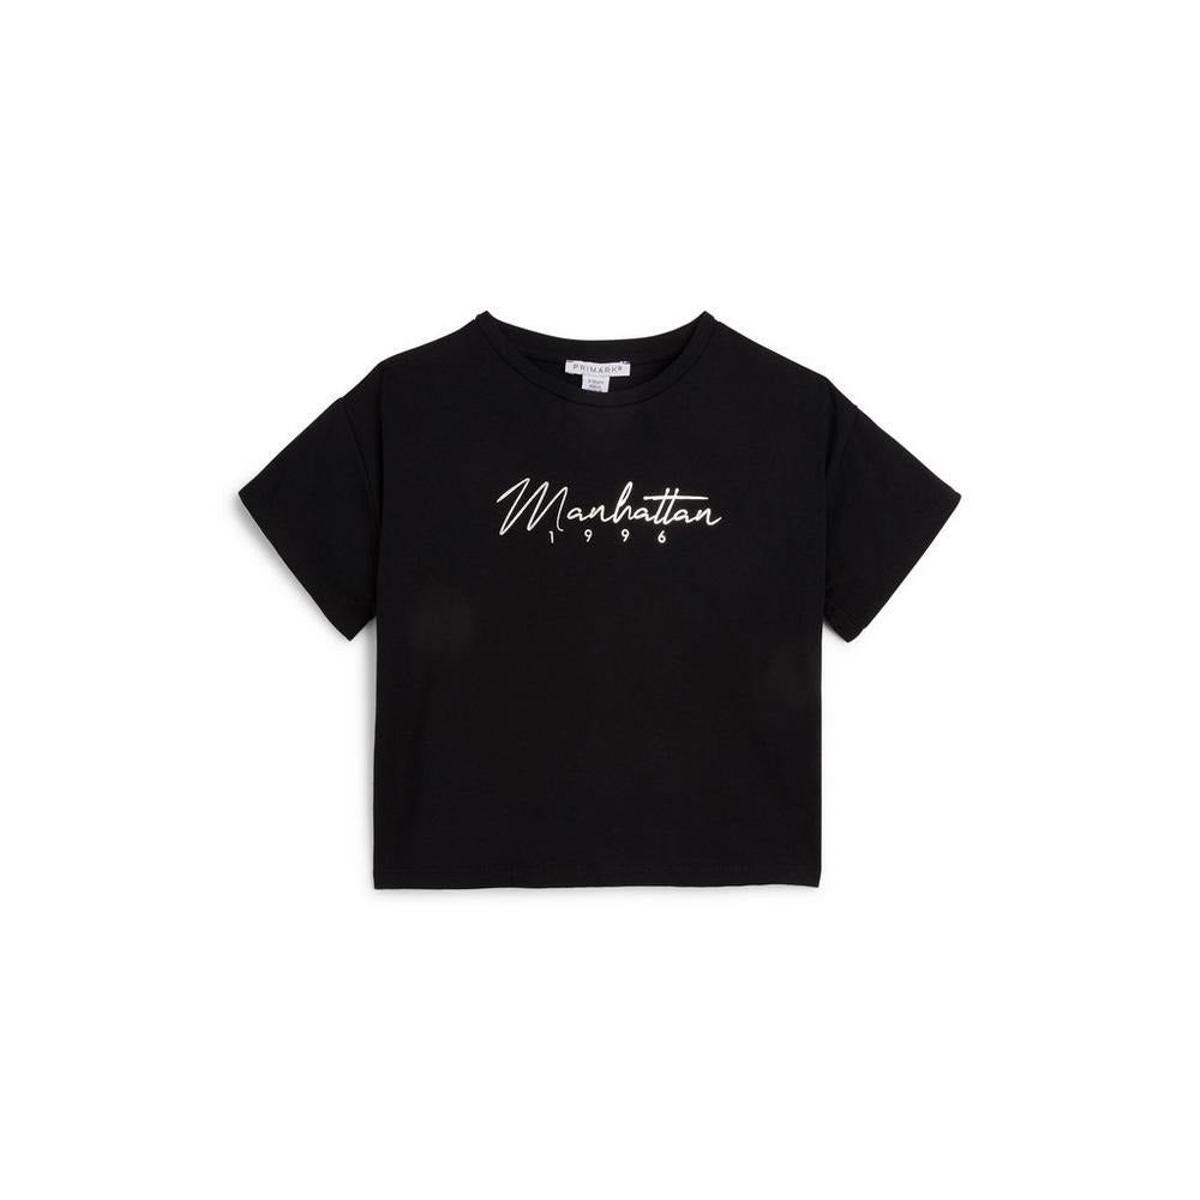 Camiseta corta negra con texto 'Manhattan', de Primark (13 euros)